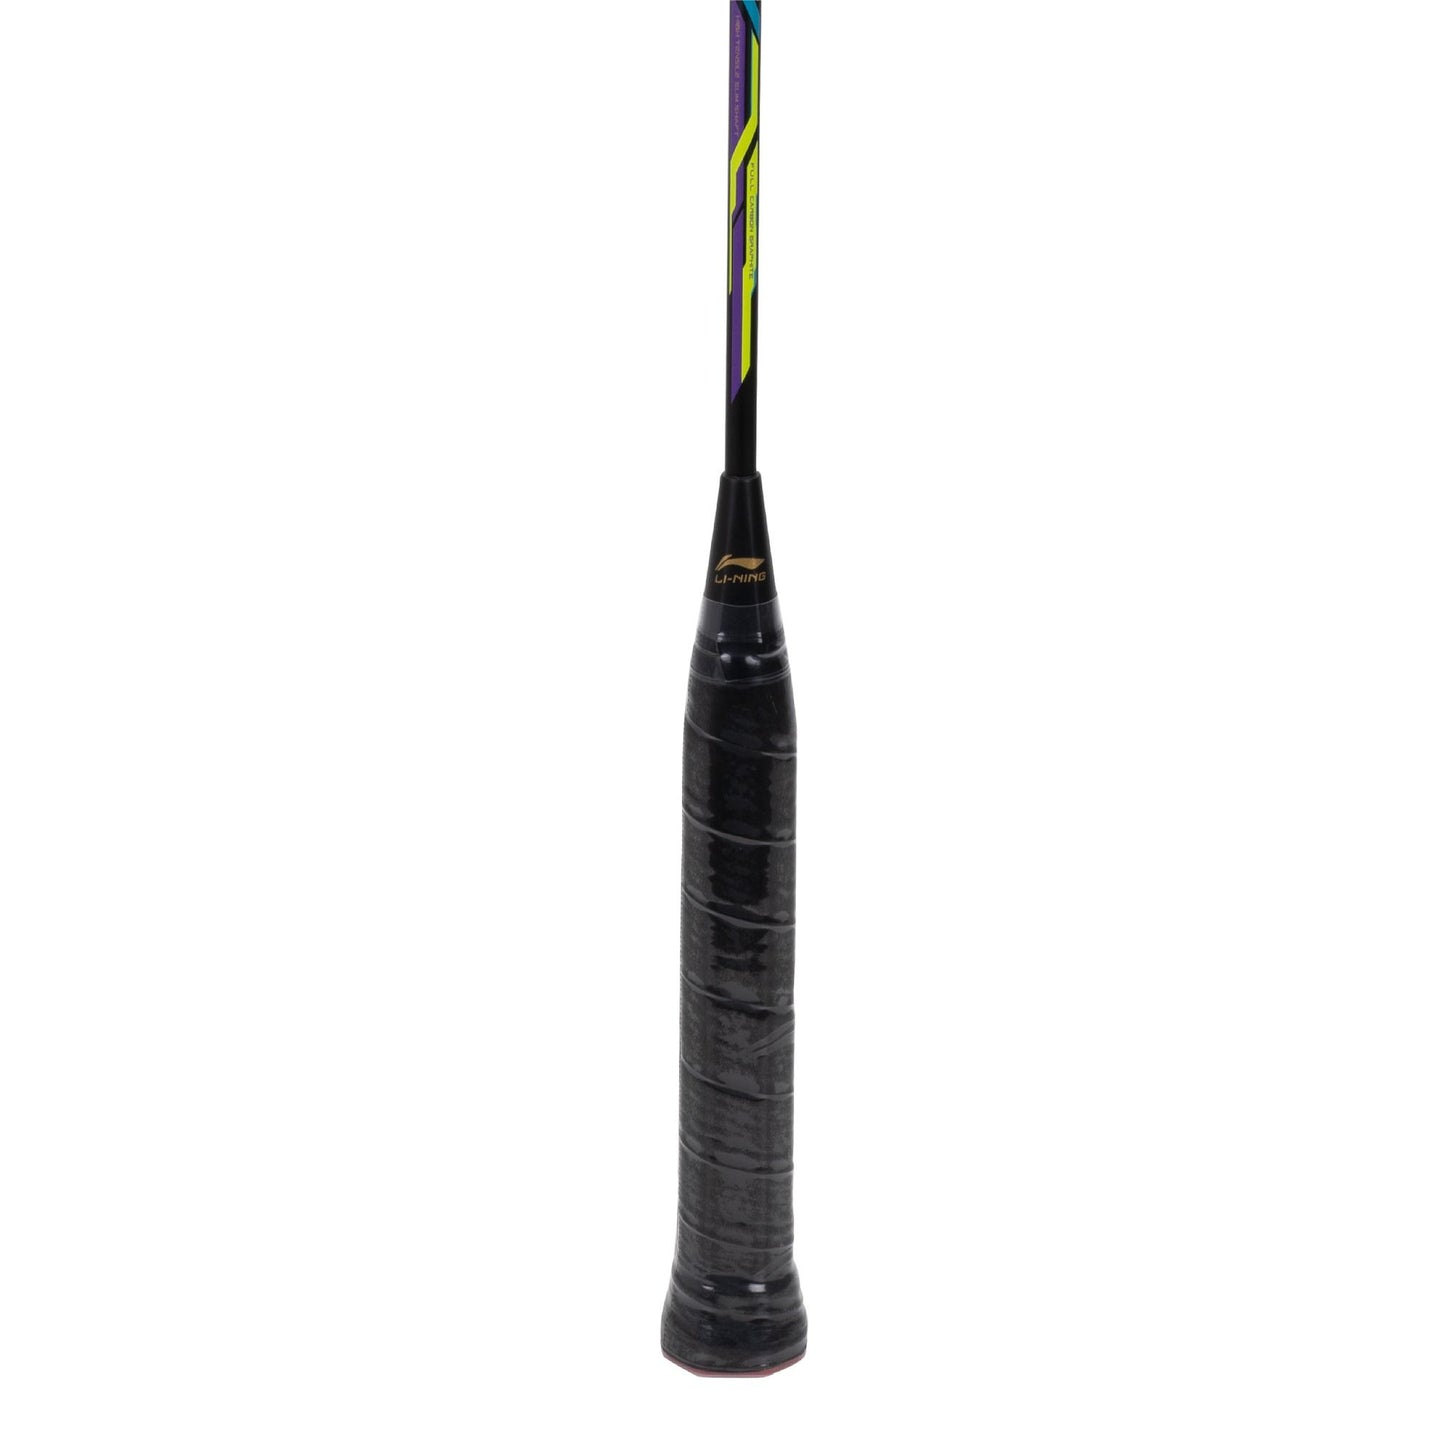 Li-Ning Turbo 99 (Black/Orange) Badminton Racket